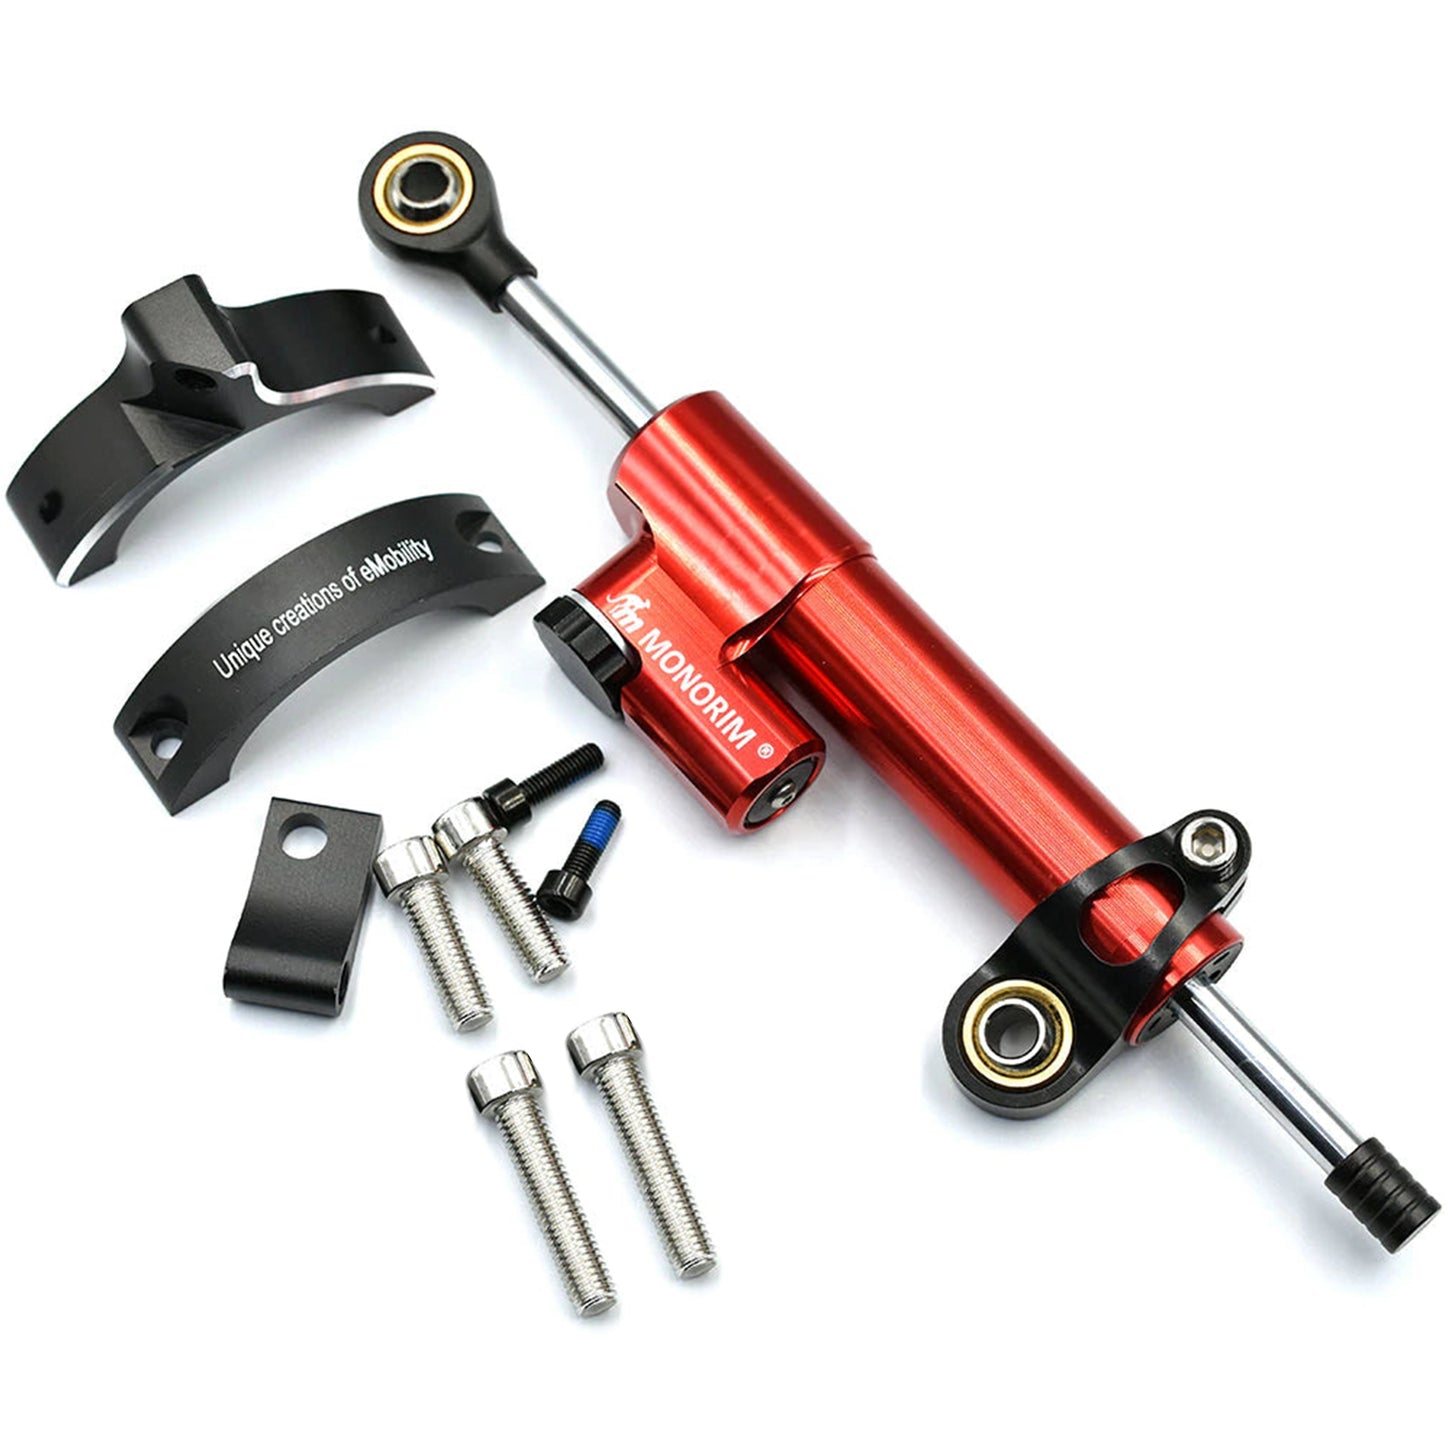 Monorim Steering Damping, Damper for Hiboy ks4 Scooter, High-speed Stabilizer